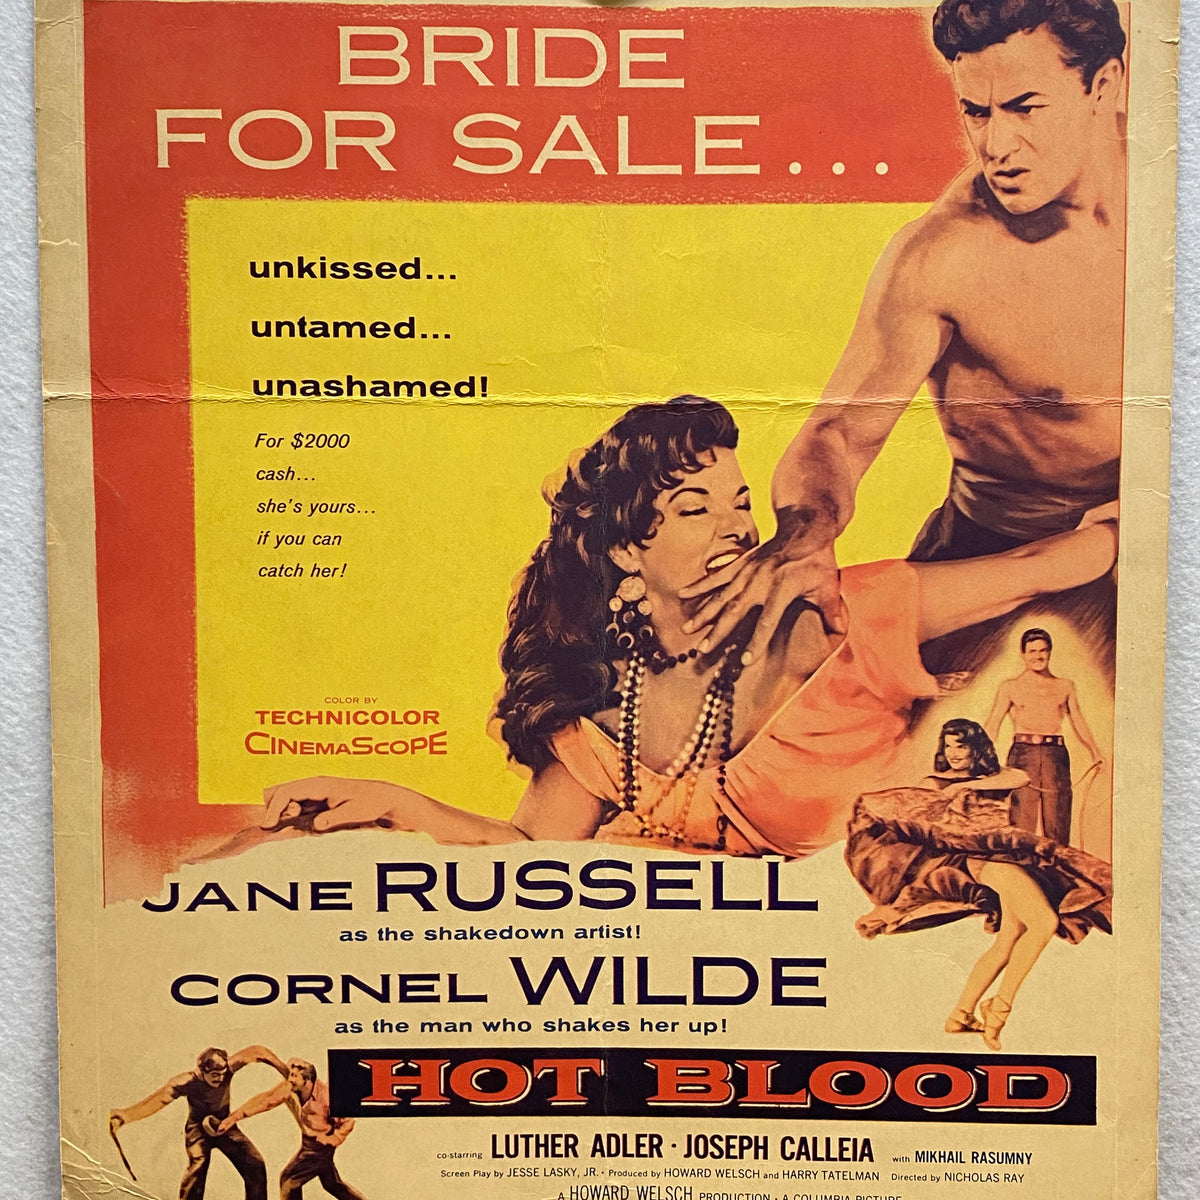 Original Blonde Sinner (1956) movie poster in F condition for $$750.00